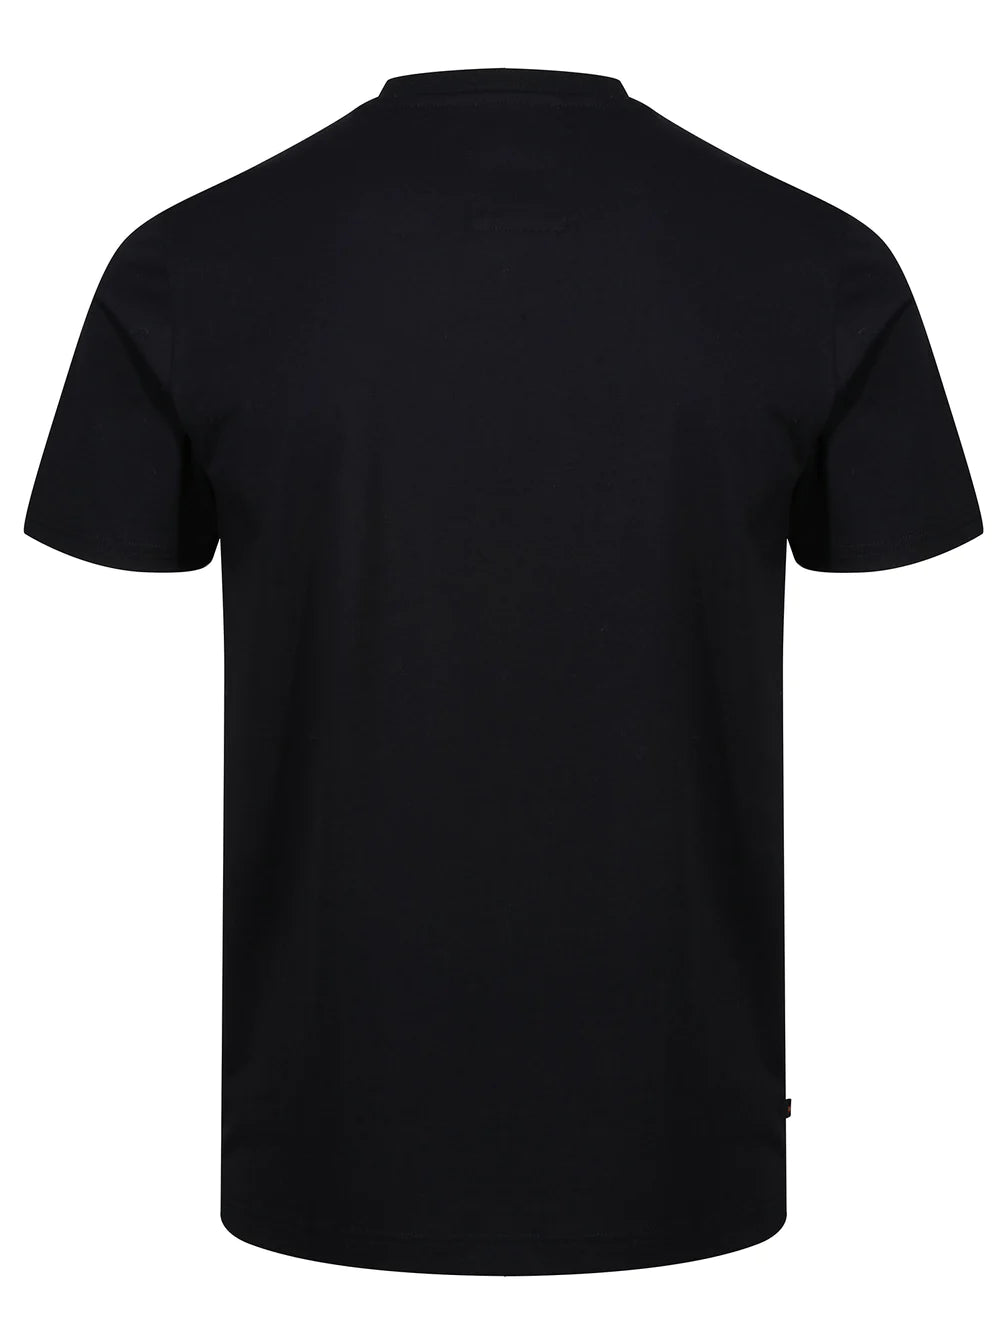 Luke 1977 - Fin T-Shirt Black